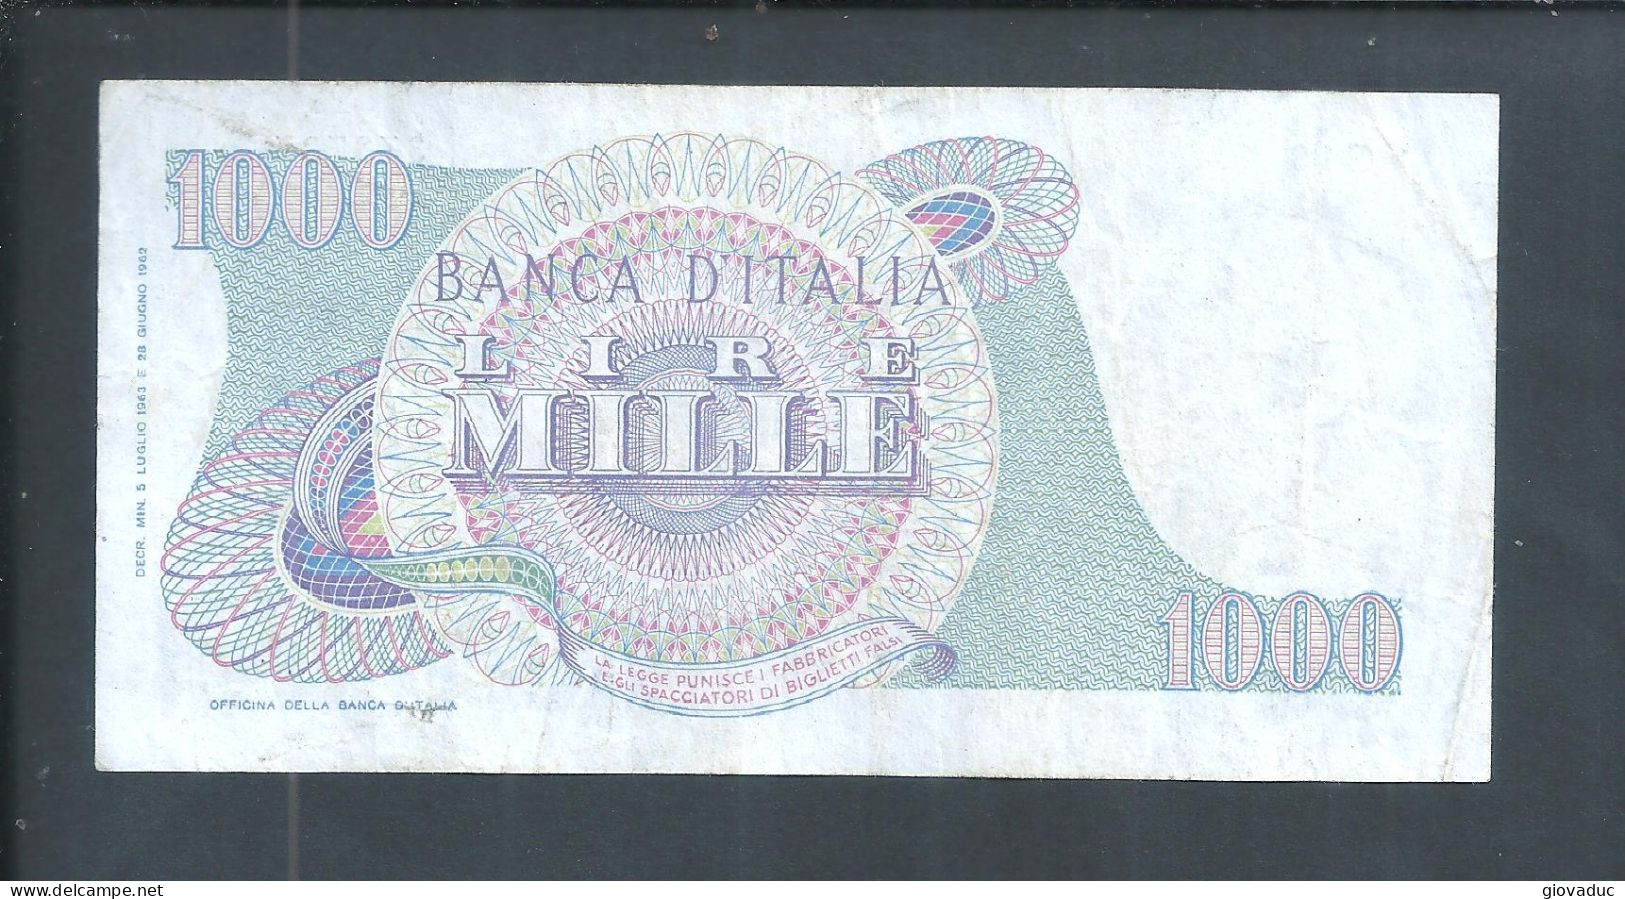 Banconota Italia 1000 Lire 28 Giugno 1962 - Rarita Unica N° C18 - 373737 - Filigrana - Vedi Foto Firme Carli-Ripa - - [ 7] Errores & Variedades